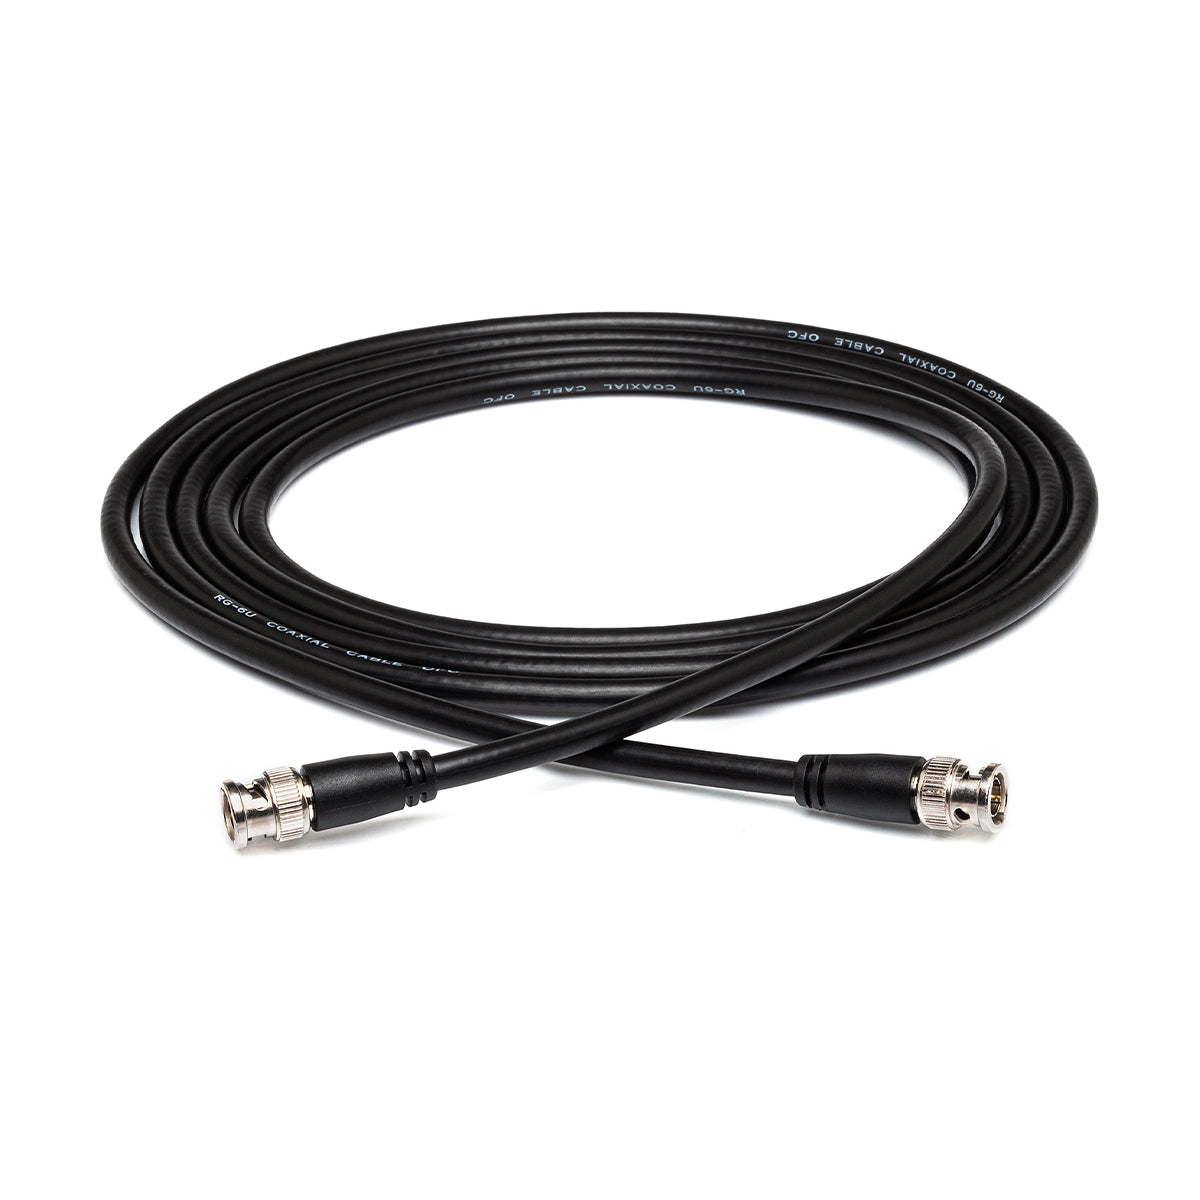 Hosa SDI PRO 75-ohm Coax Cable 3ft (BNC to BNC)